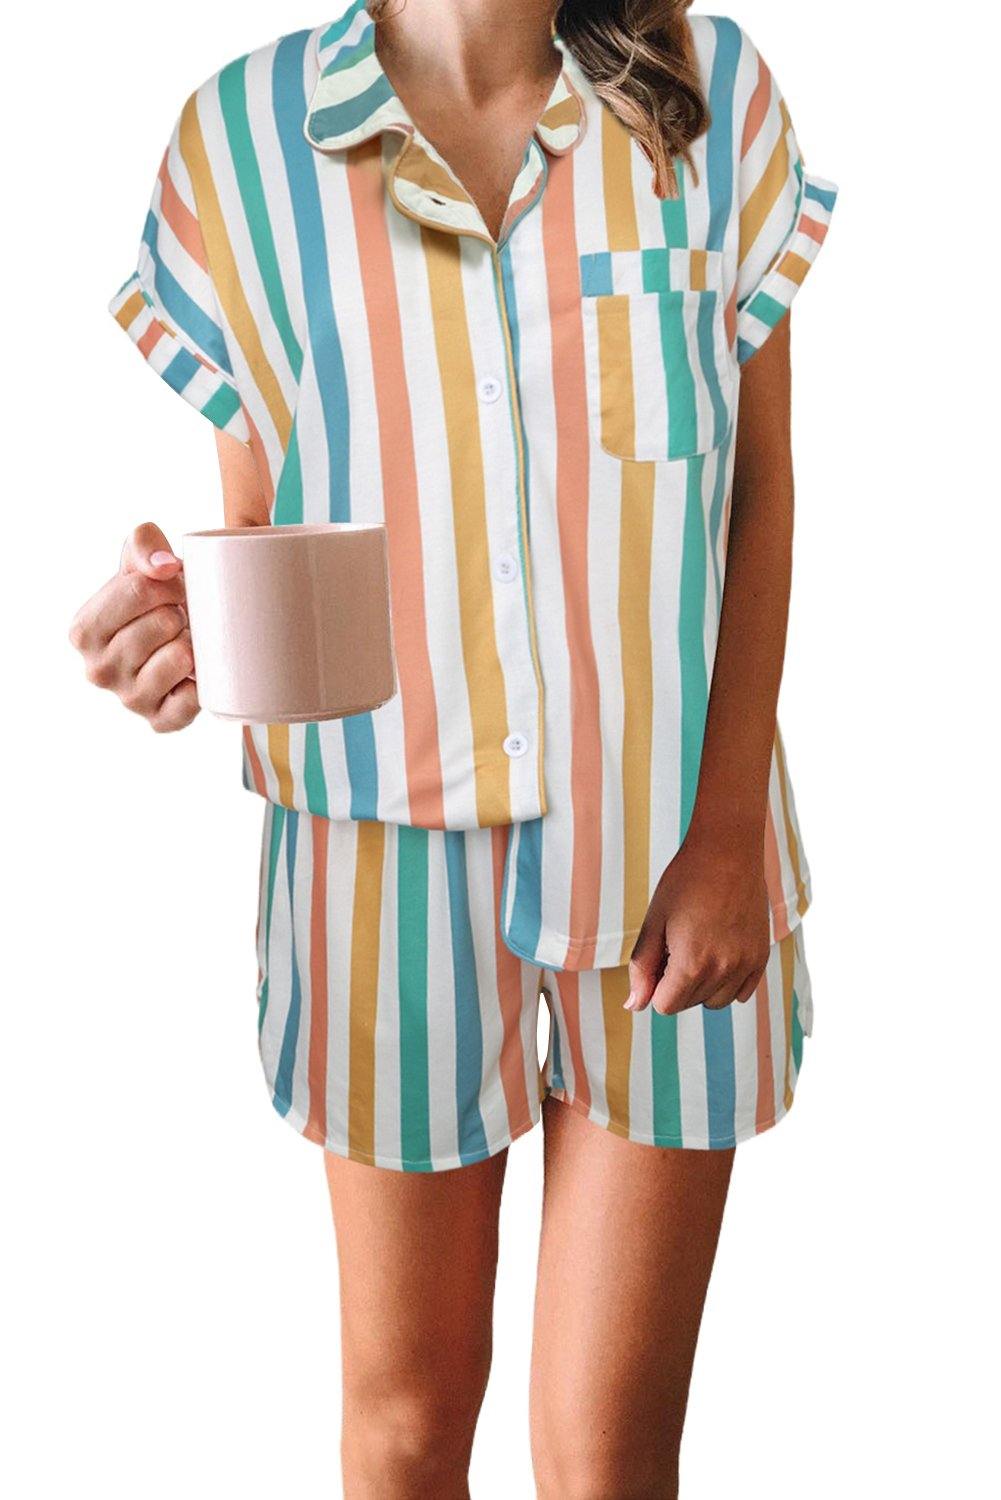 Multicolor Striped Turn-down Collared Pajamas Set - L & M Kee, LLC